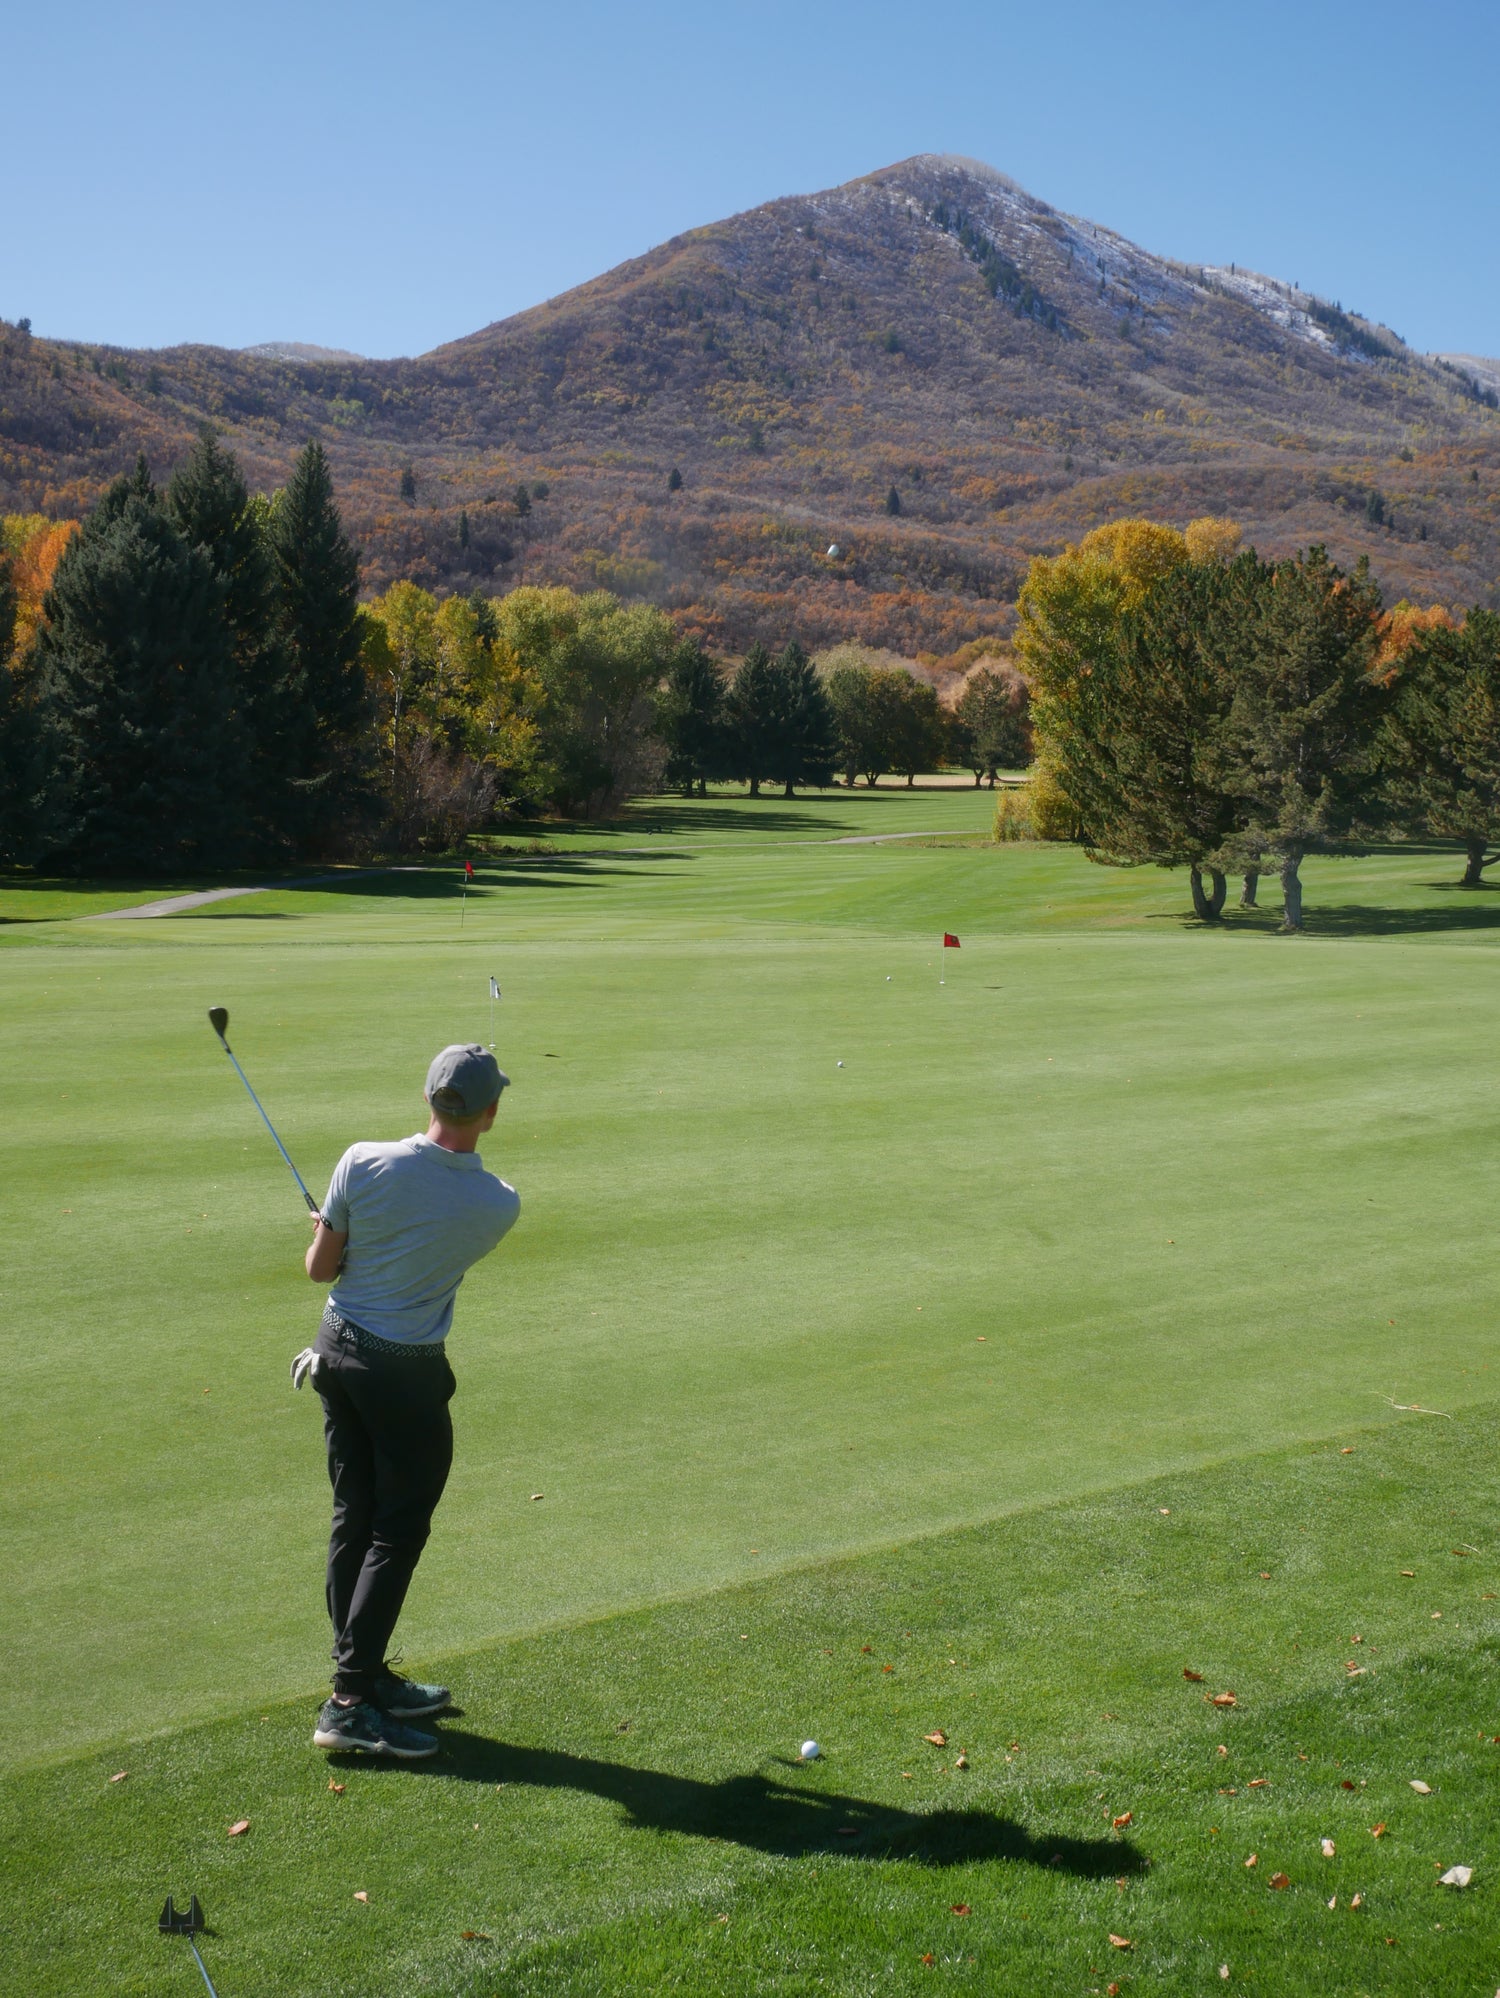 Scotty's Top 5 Fall Golf Trips